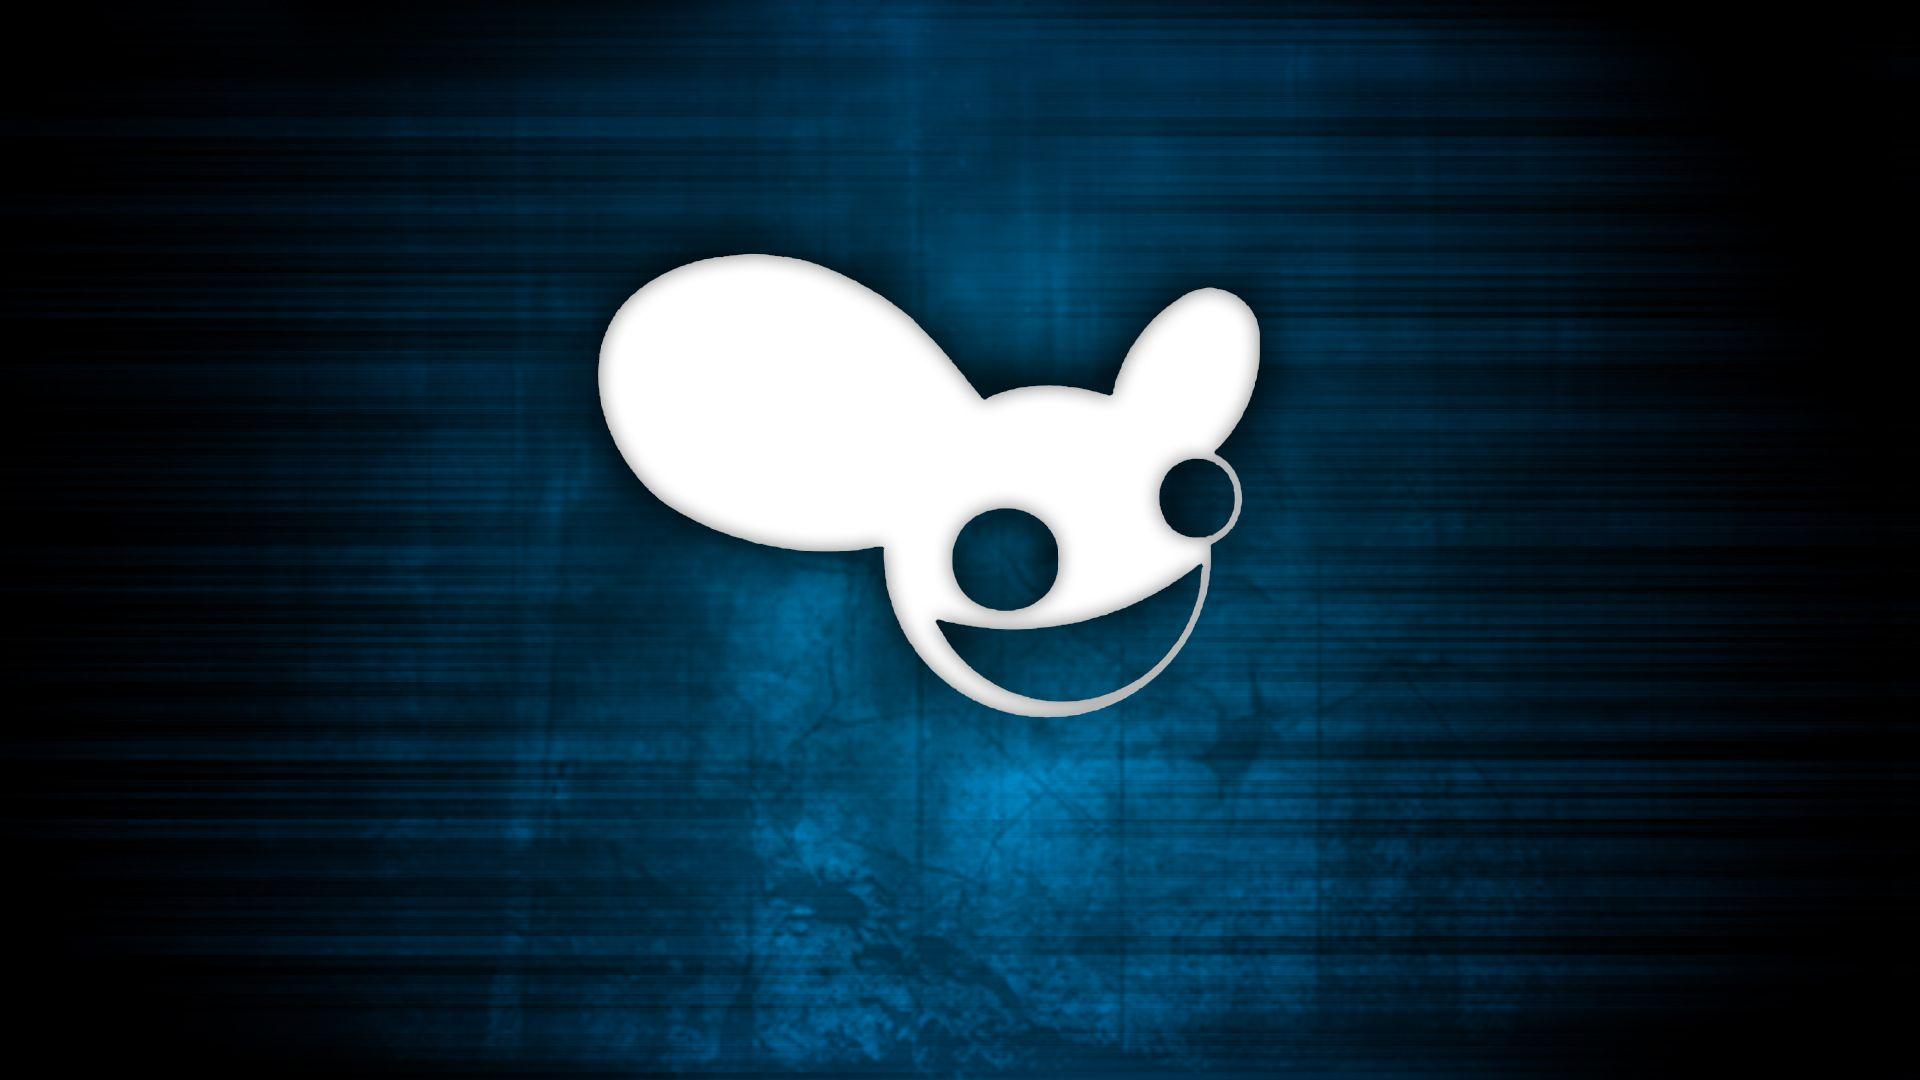 Deadmau5 Blue HD Wallpaper, Background Image